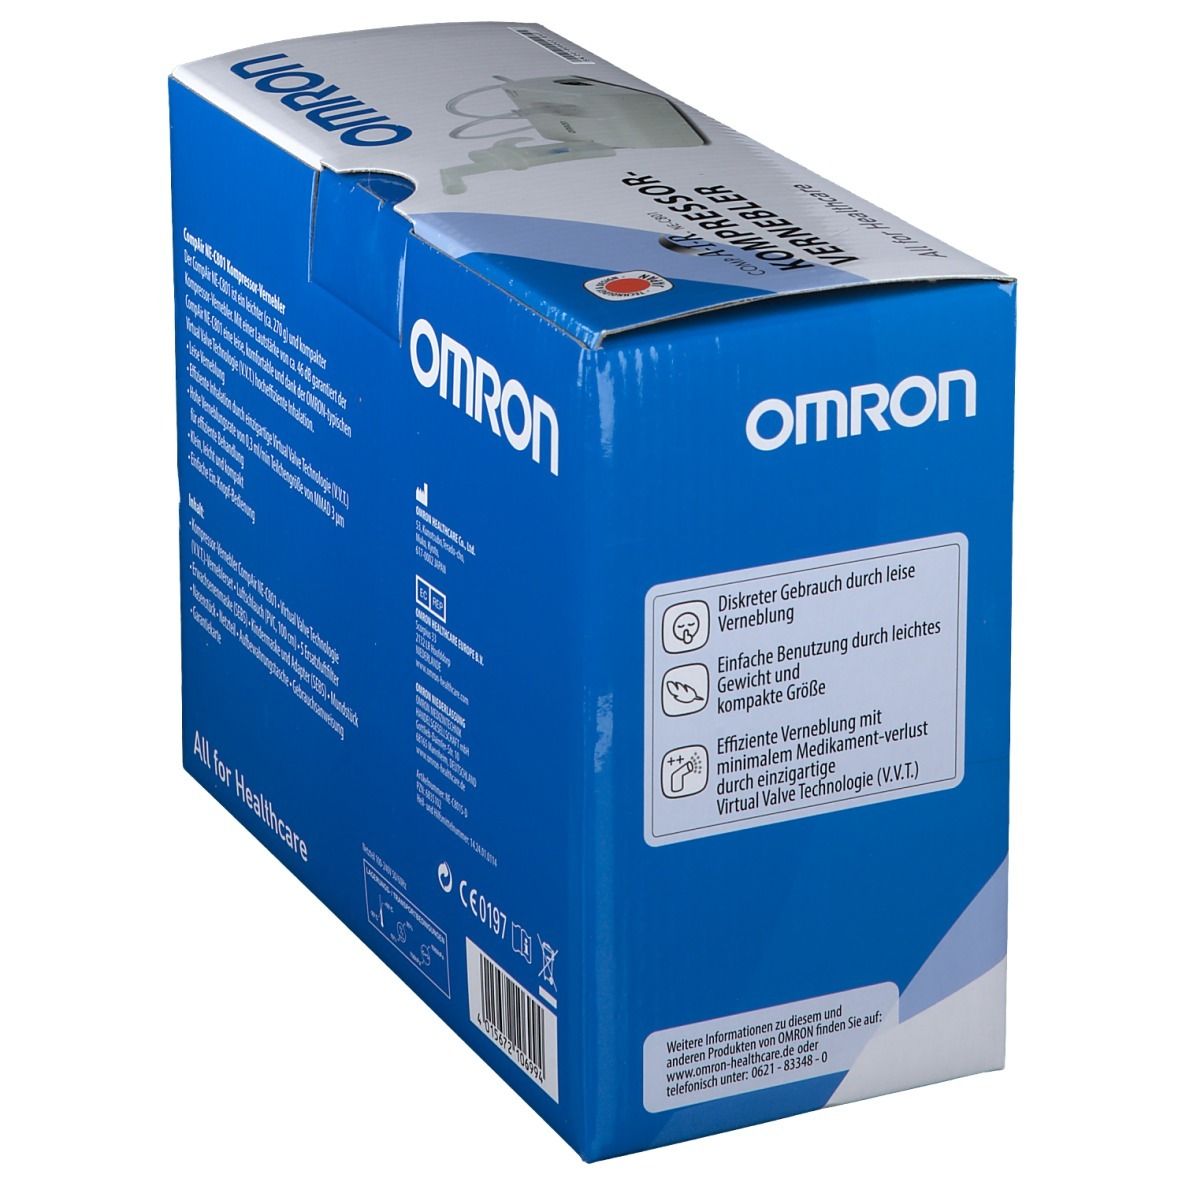 OMRON CompAir C801 Inhalationsgerät